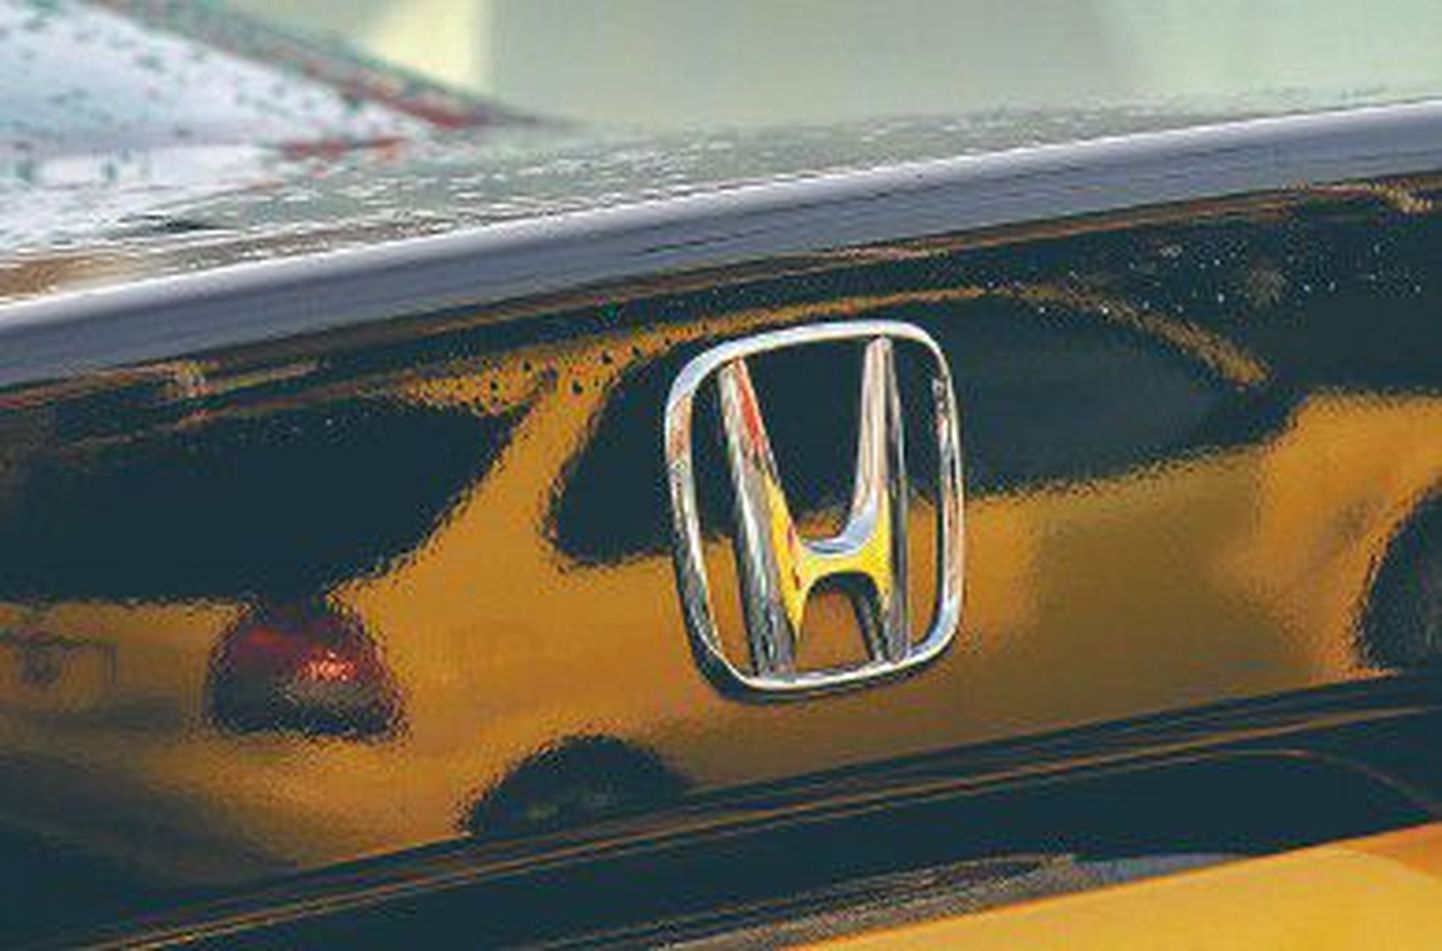 Логотип Honda